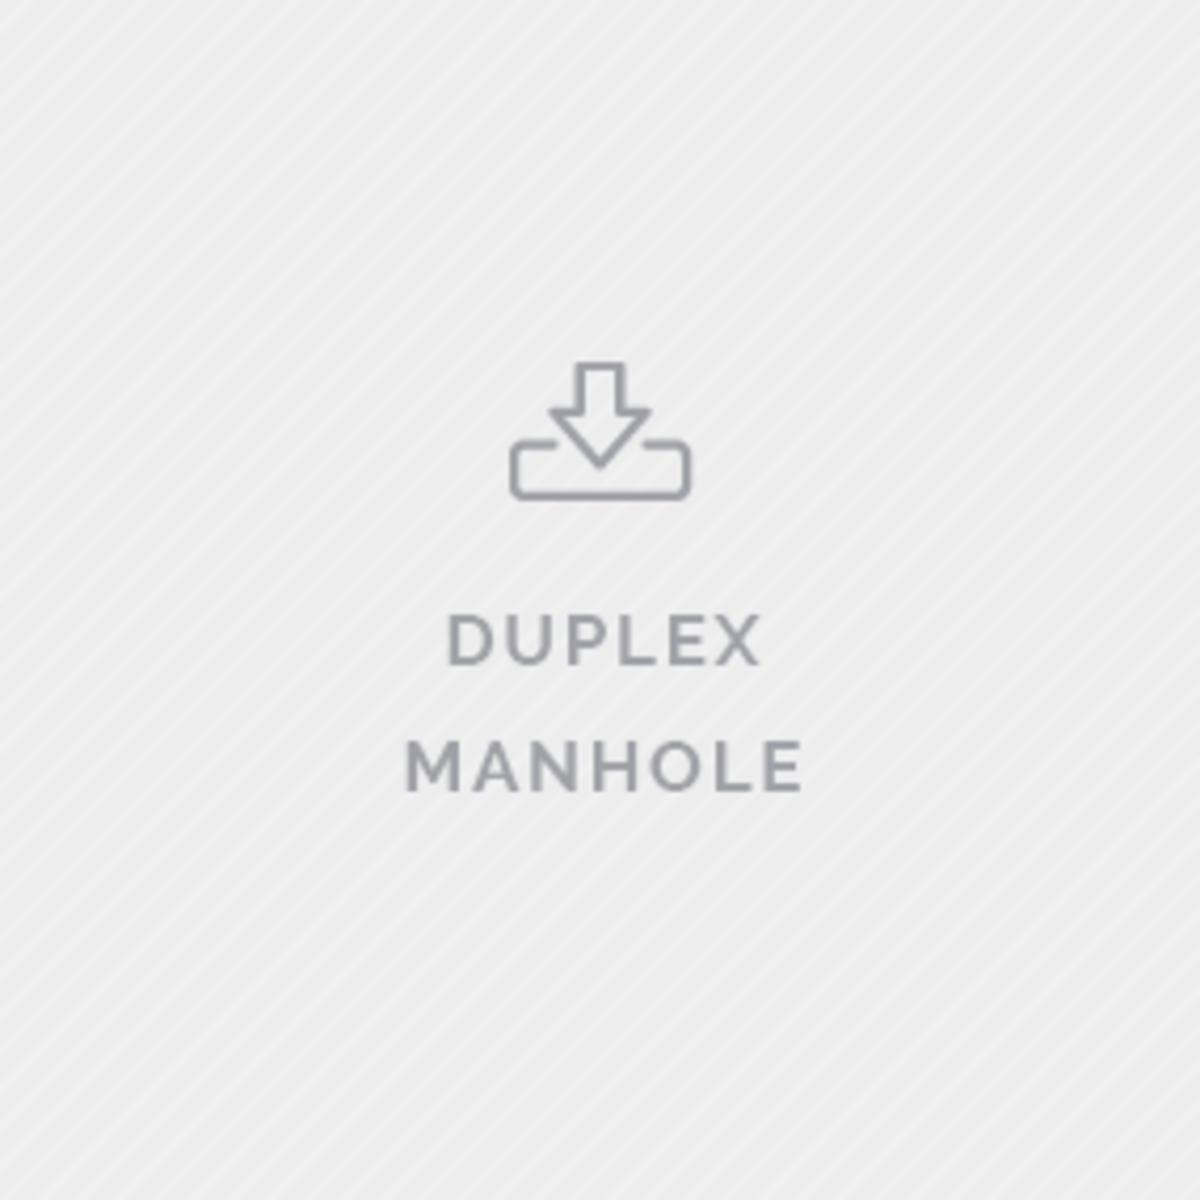 order sheet duplex manhole